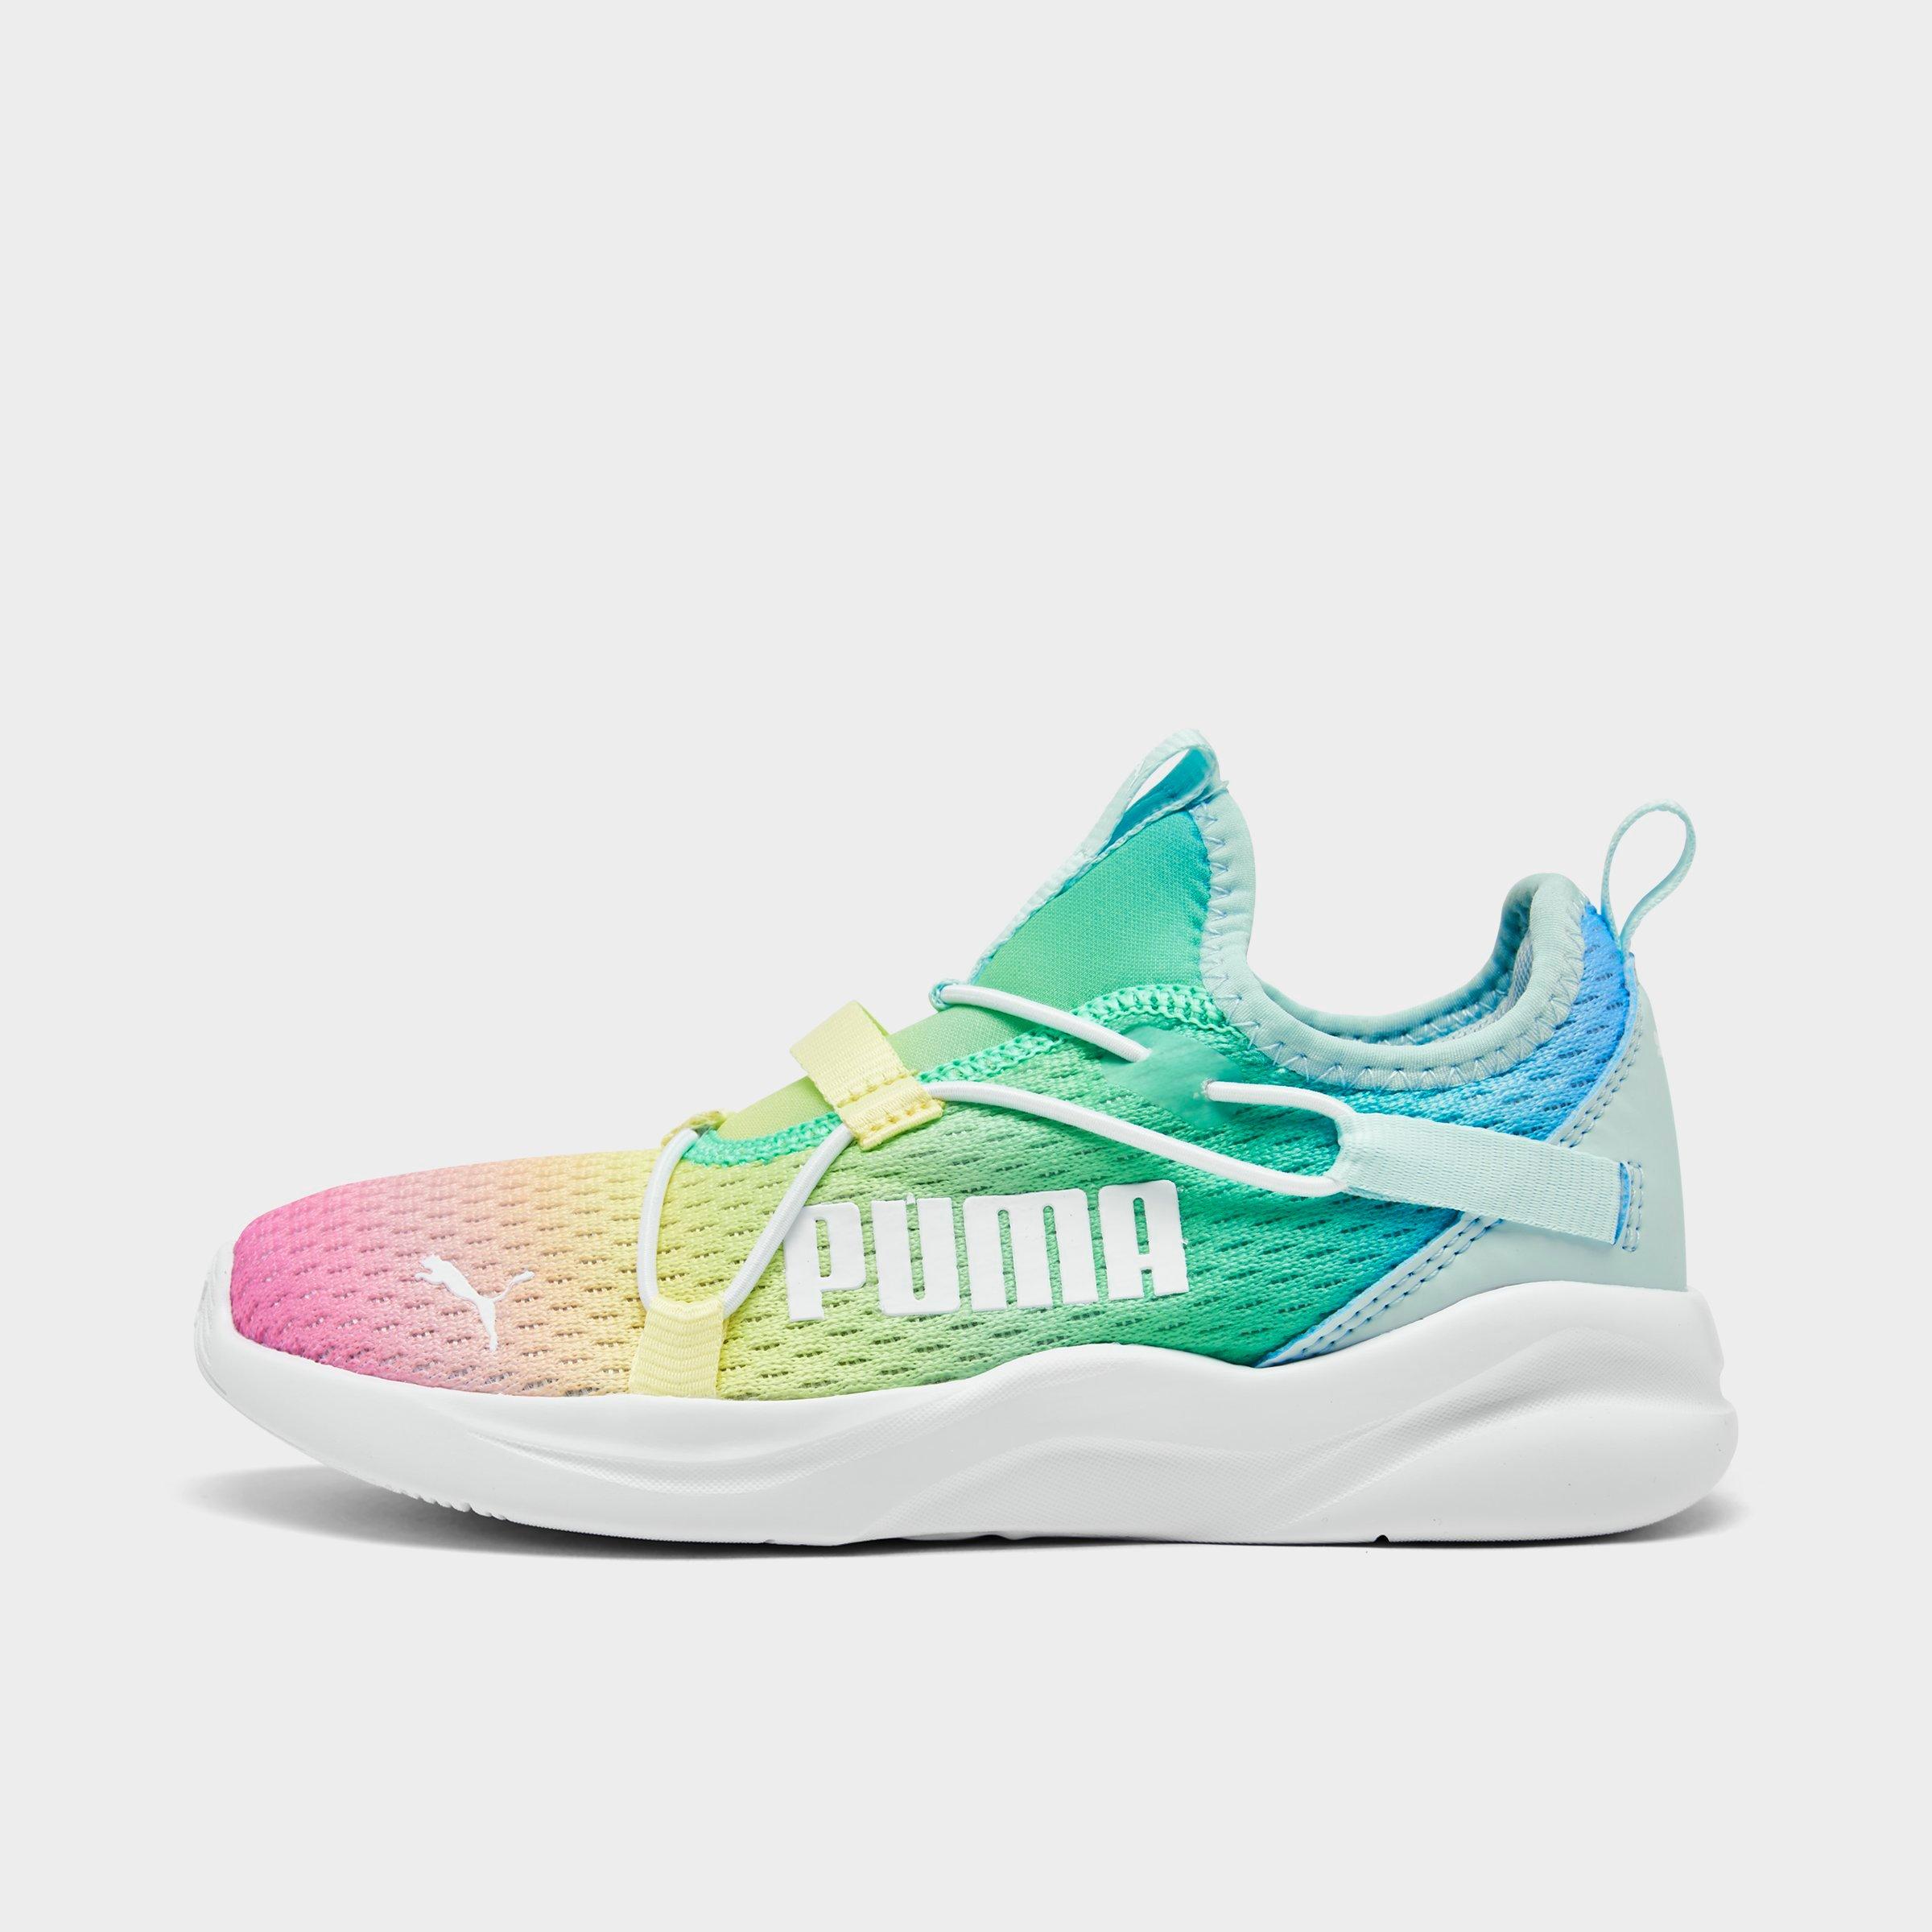 girls rainbow tennis shoes